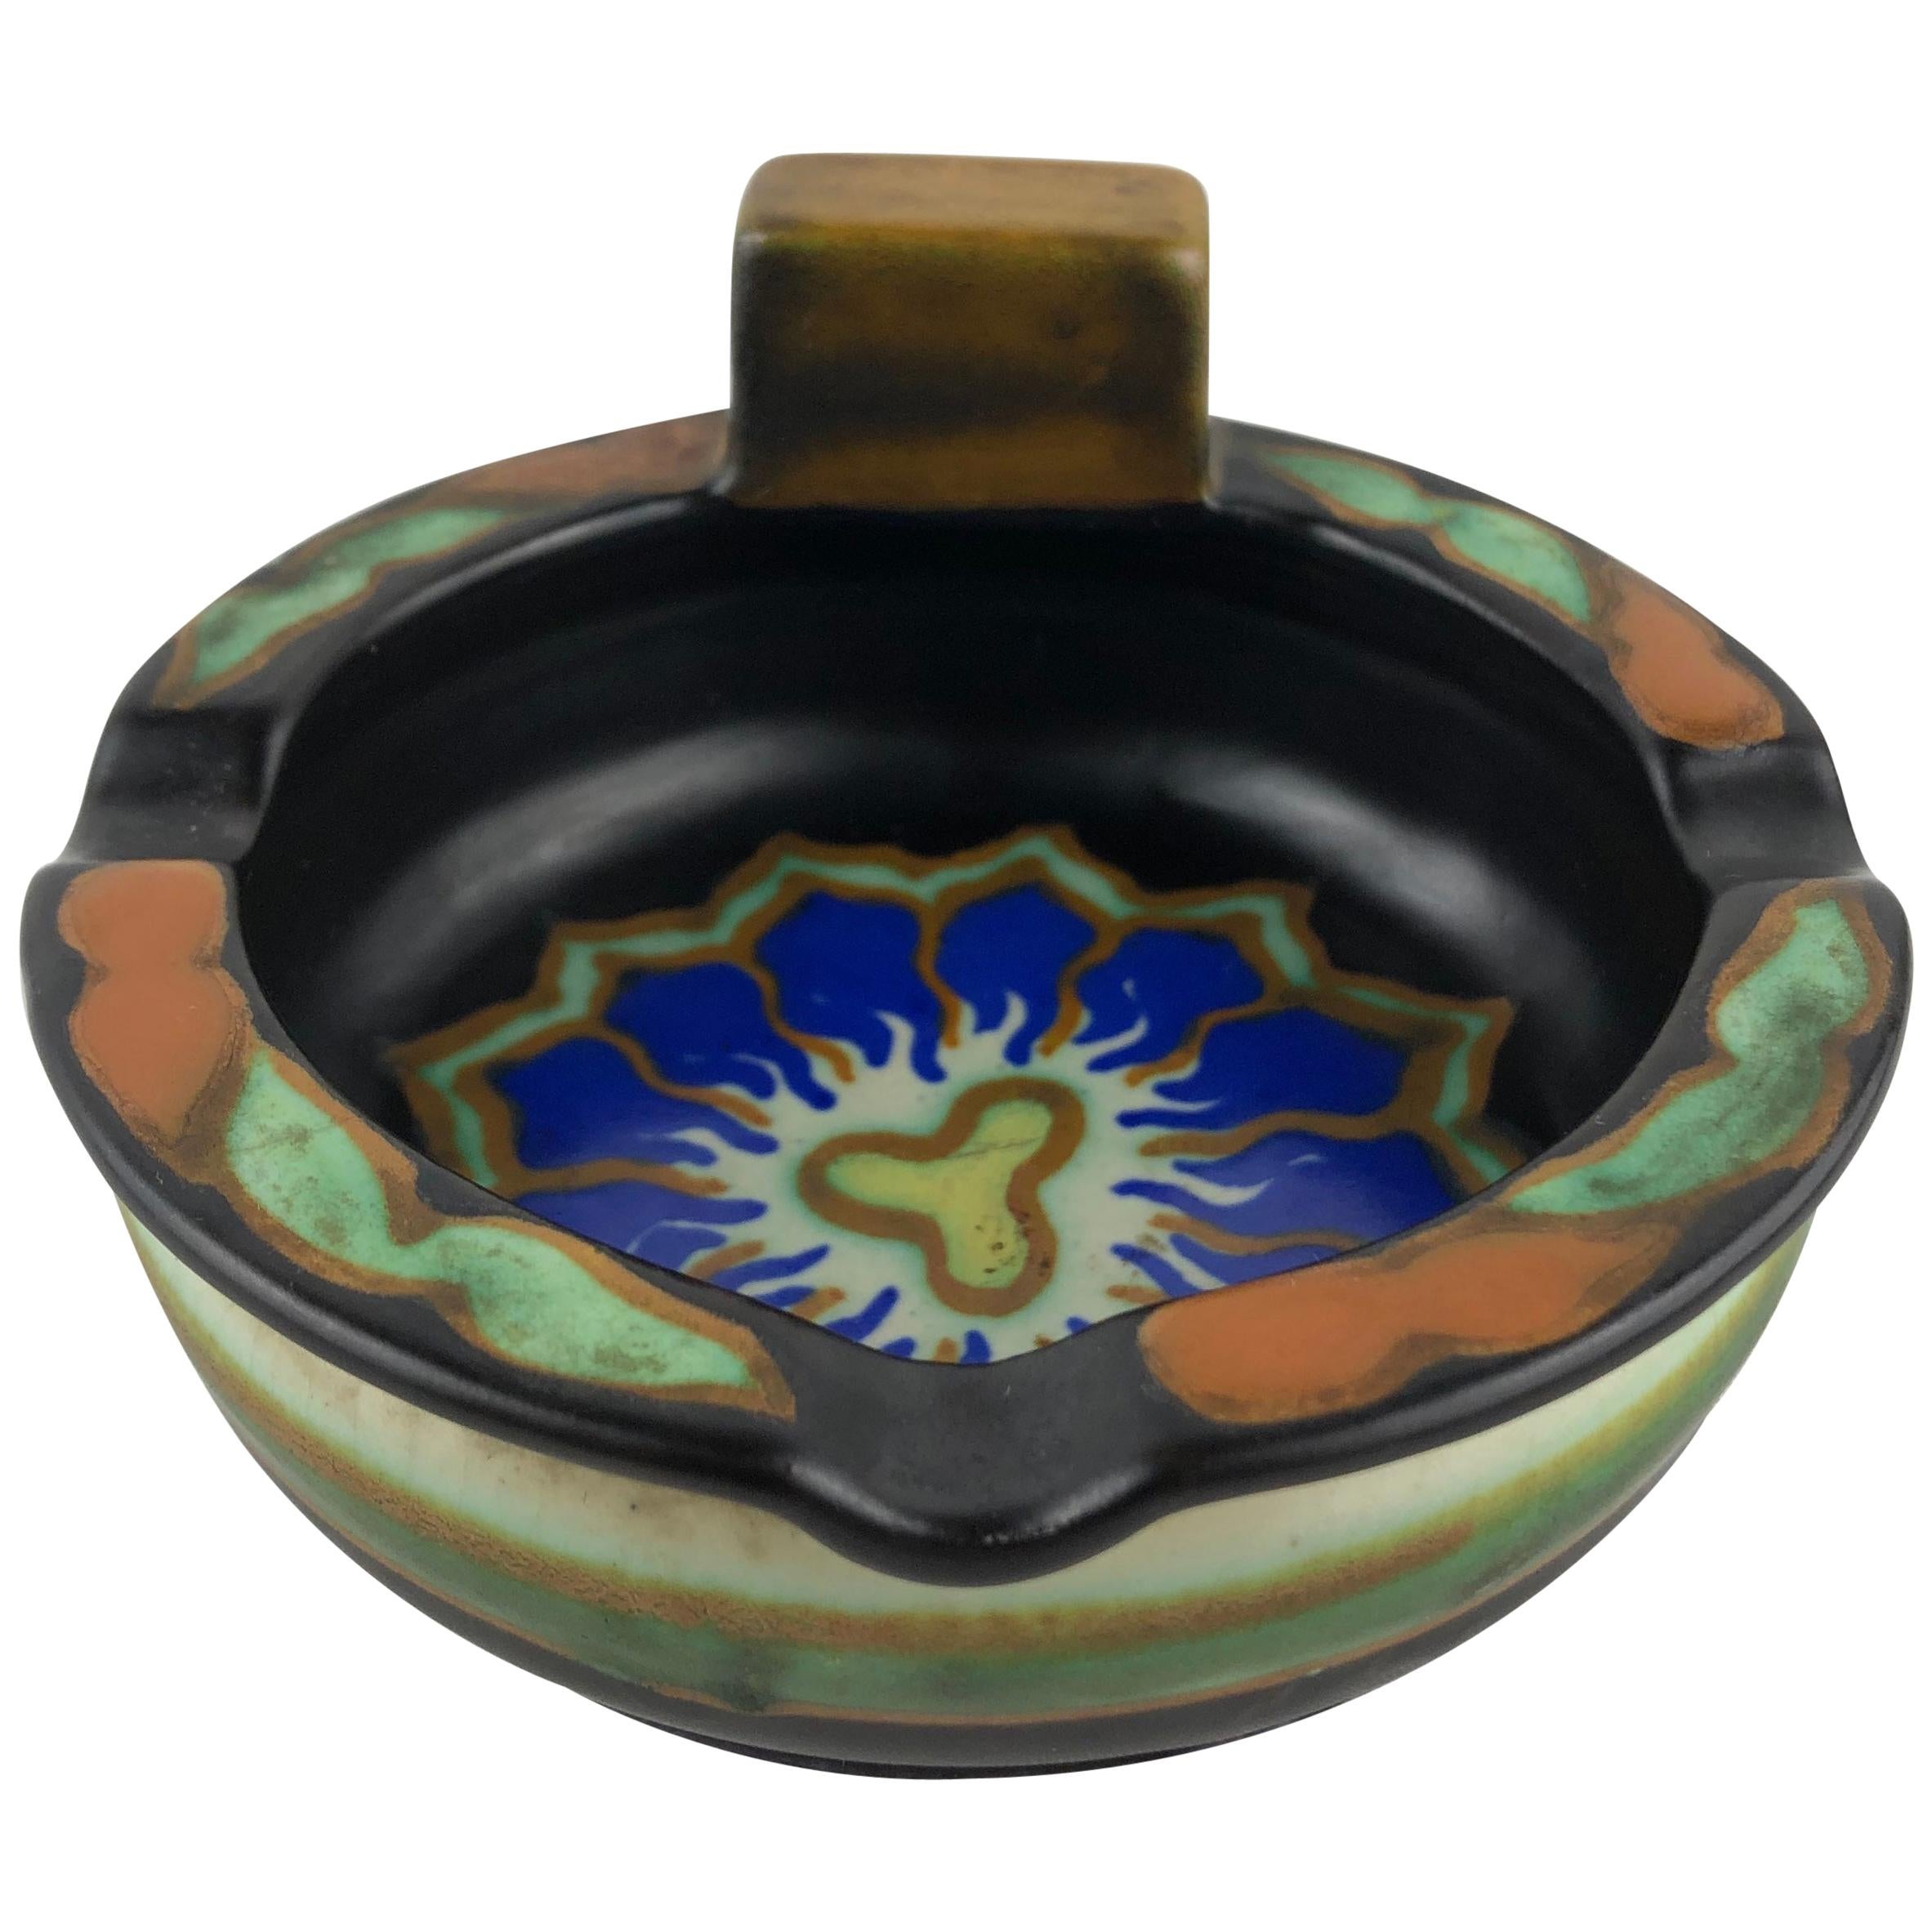 Ceramic Ashtray or Key Holder/Vide Poche Dutch Art Nouveau